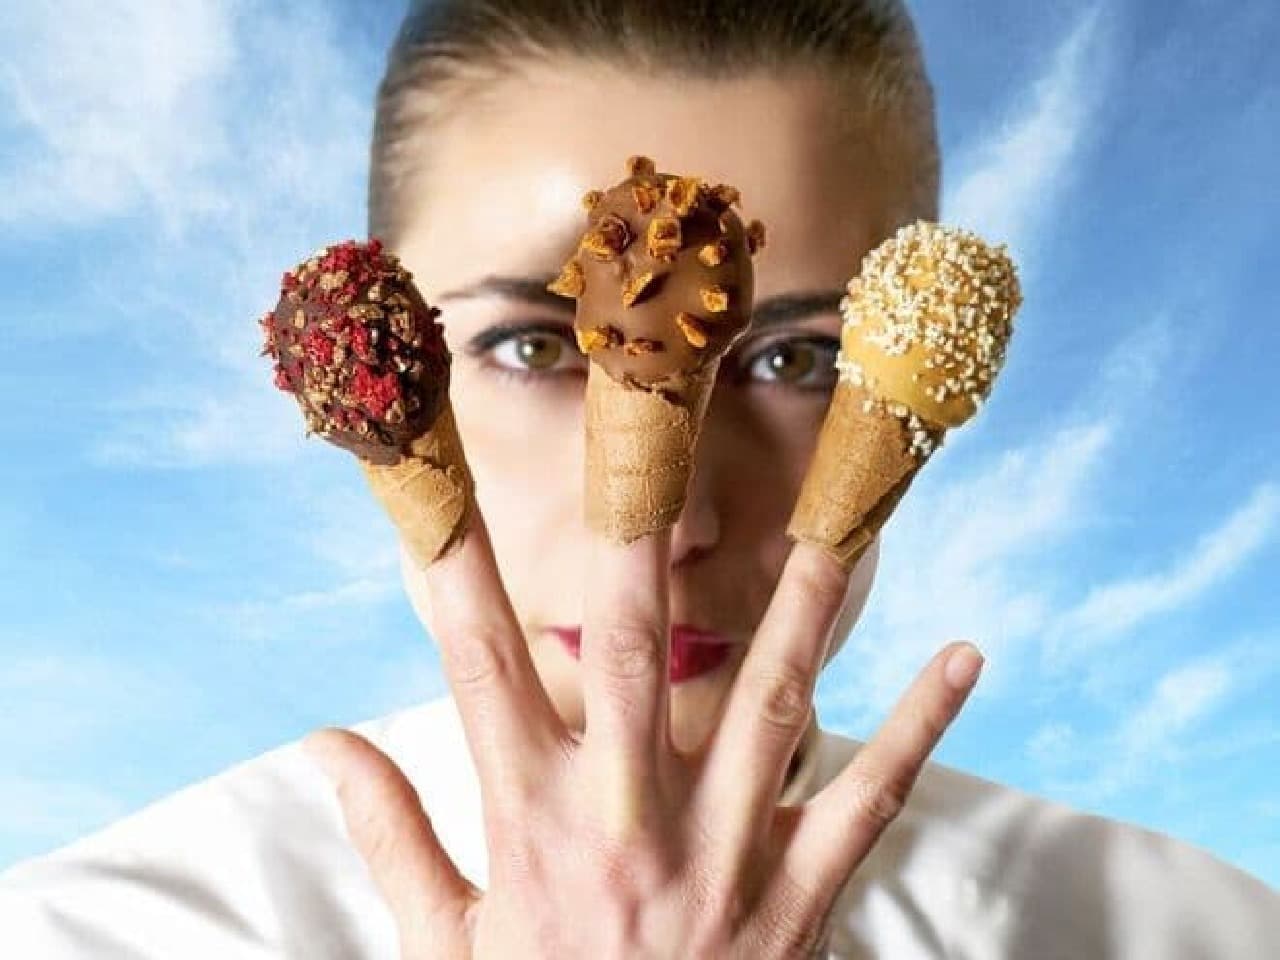 Giapoの新作「指にはめるアイスクリーム」